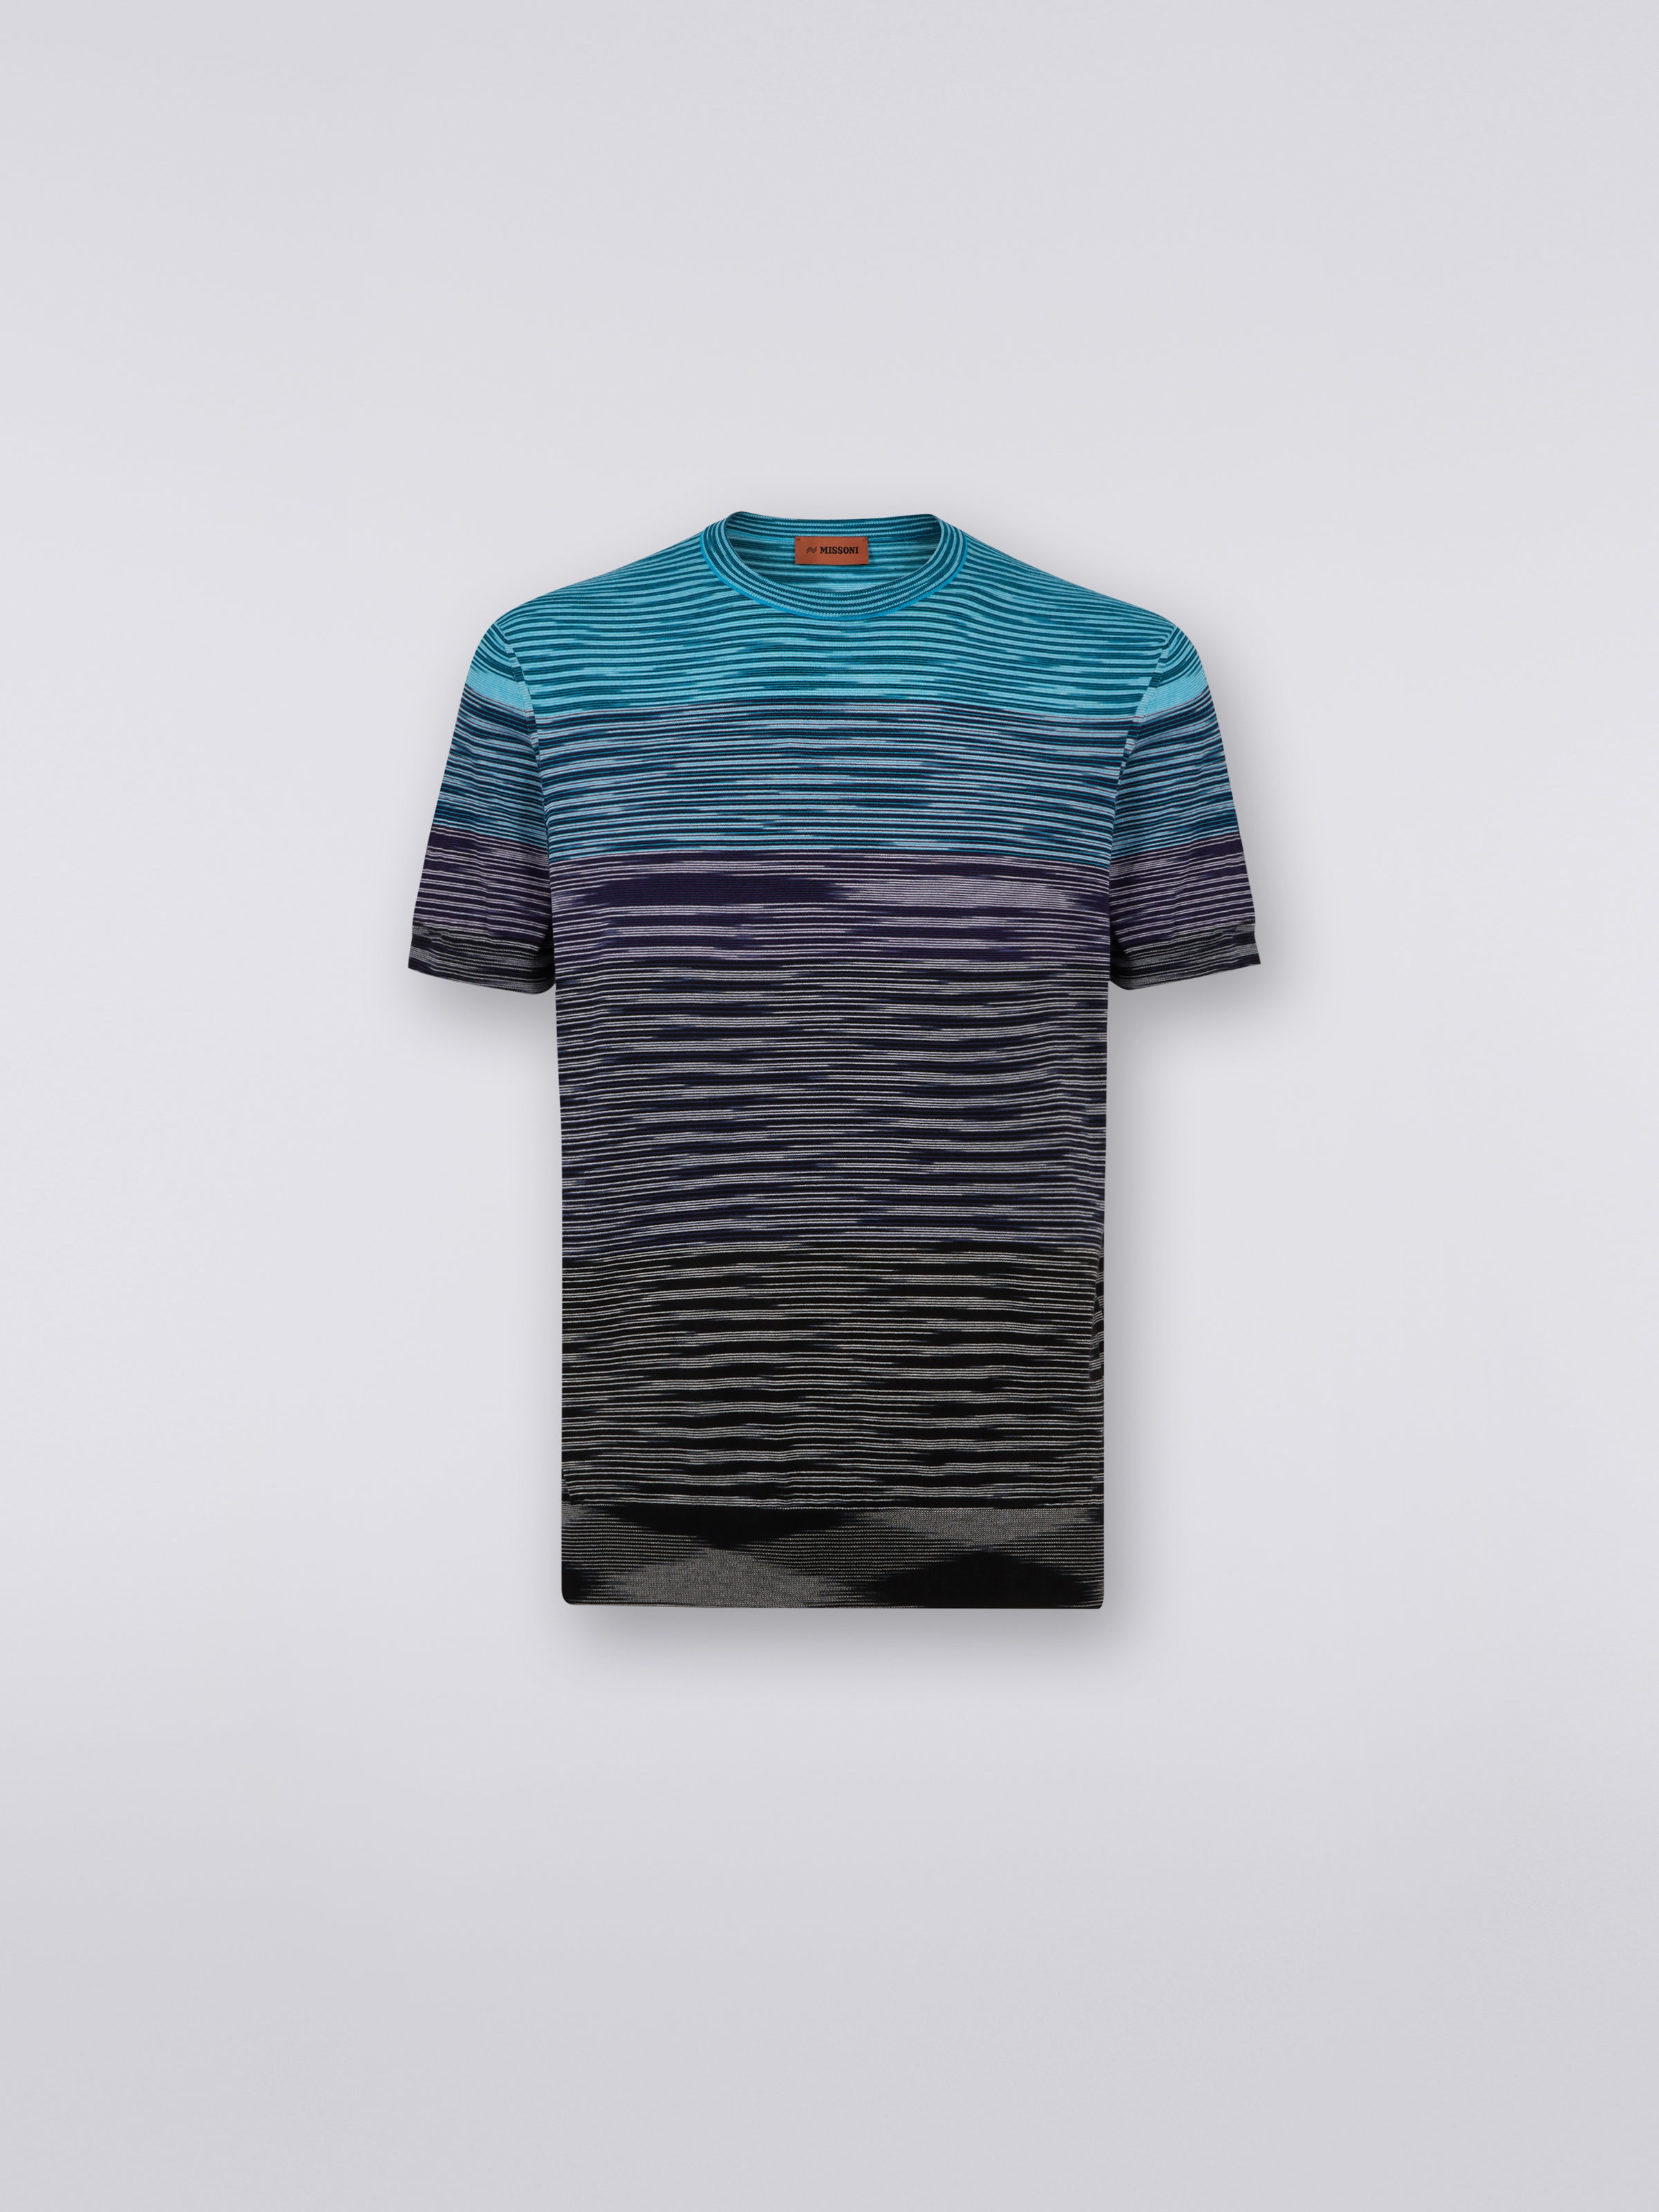 Camiseta de cuello redondo y manga corta en punto de algodón a rayas degradadas, Azul Oscuro, Morado & Negro - 0